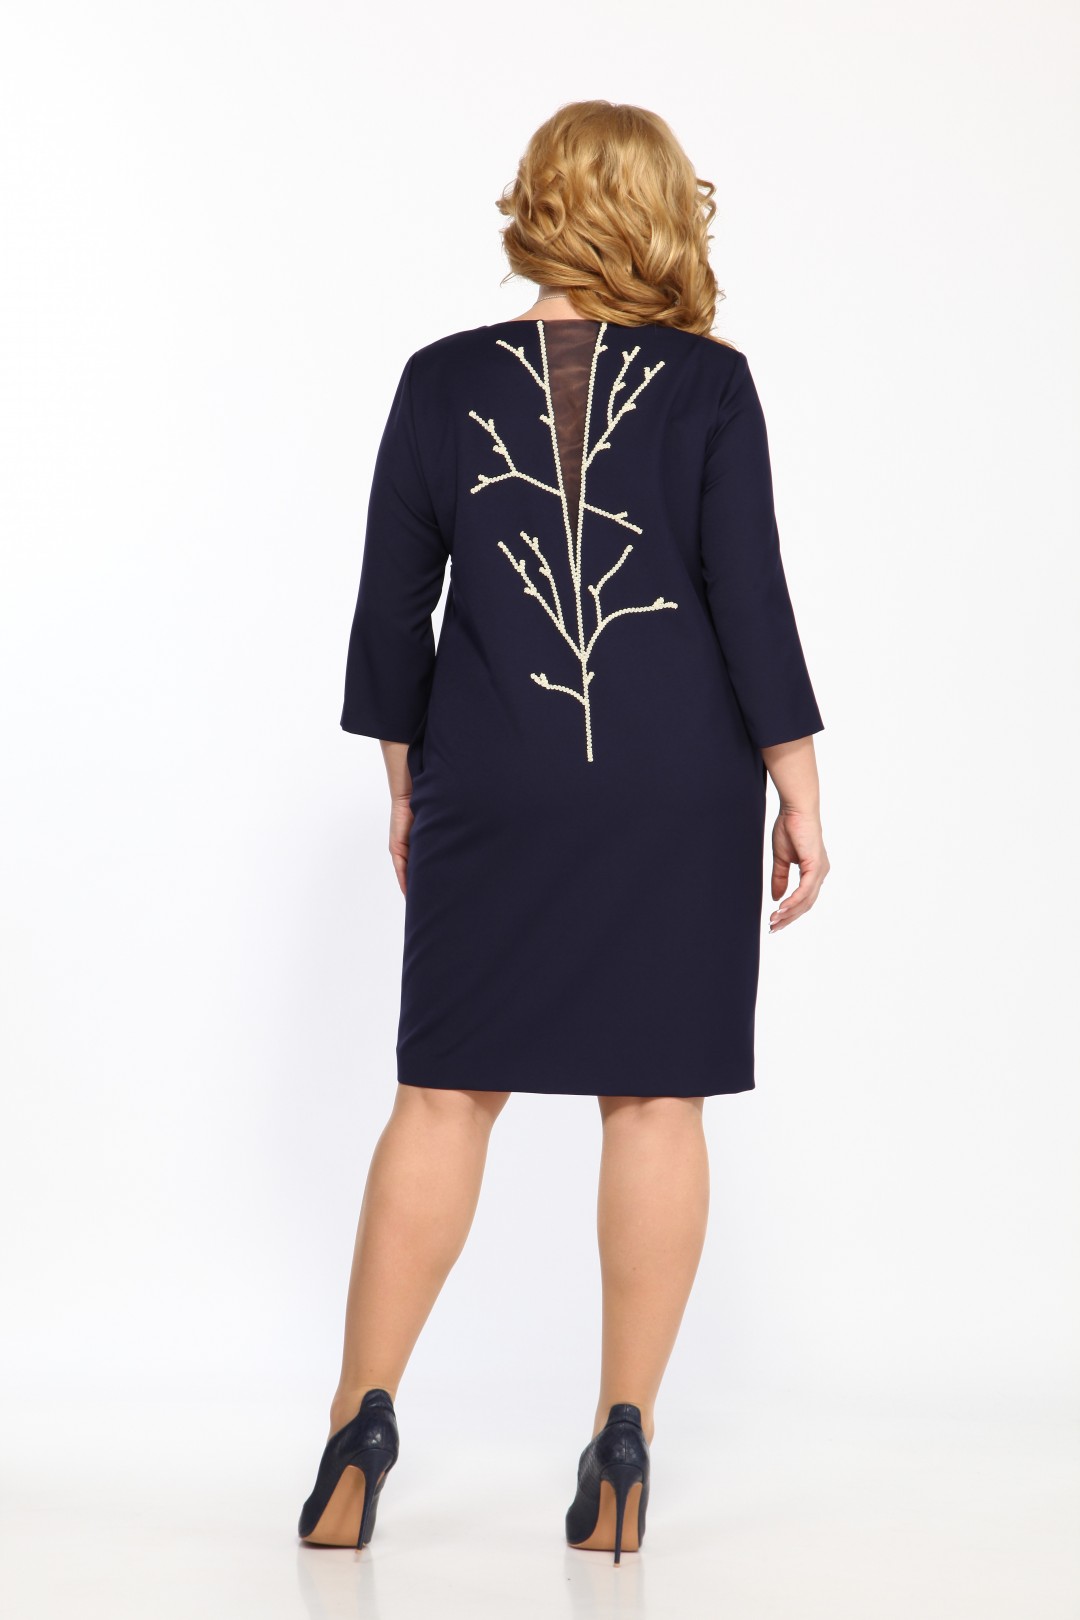 Платье Мода-Версаль 2354 т.синий